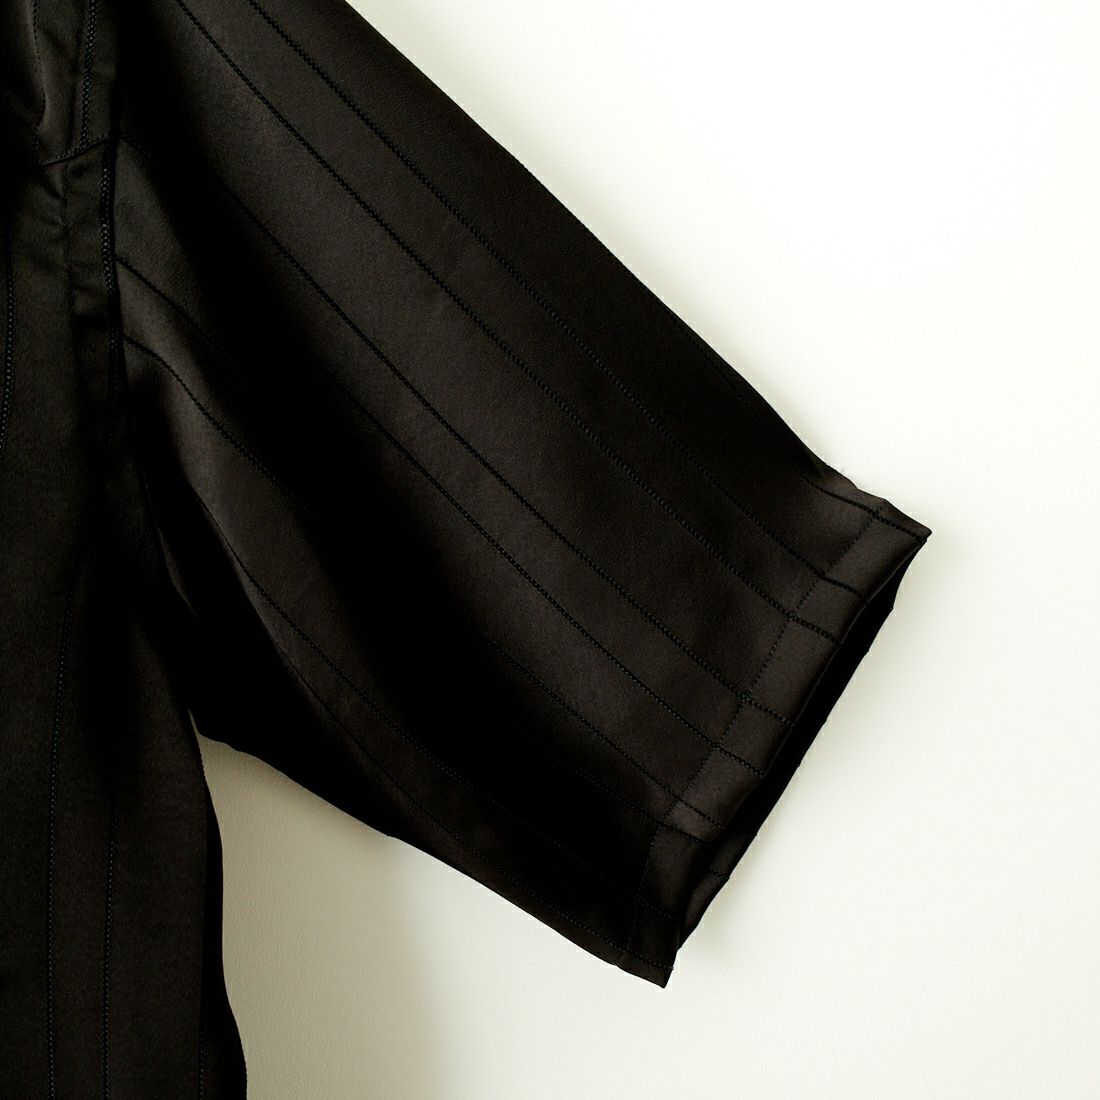 Needles [ニードルズ] カウボーイワンナップカラーシャツ [OT202] C BLACK